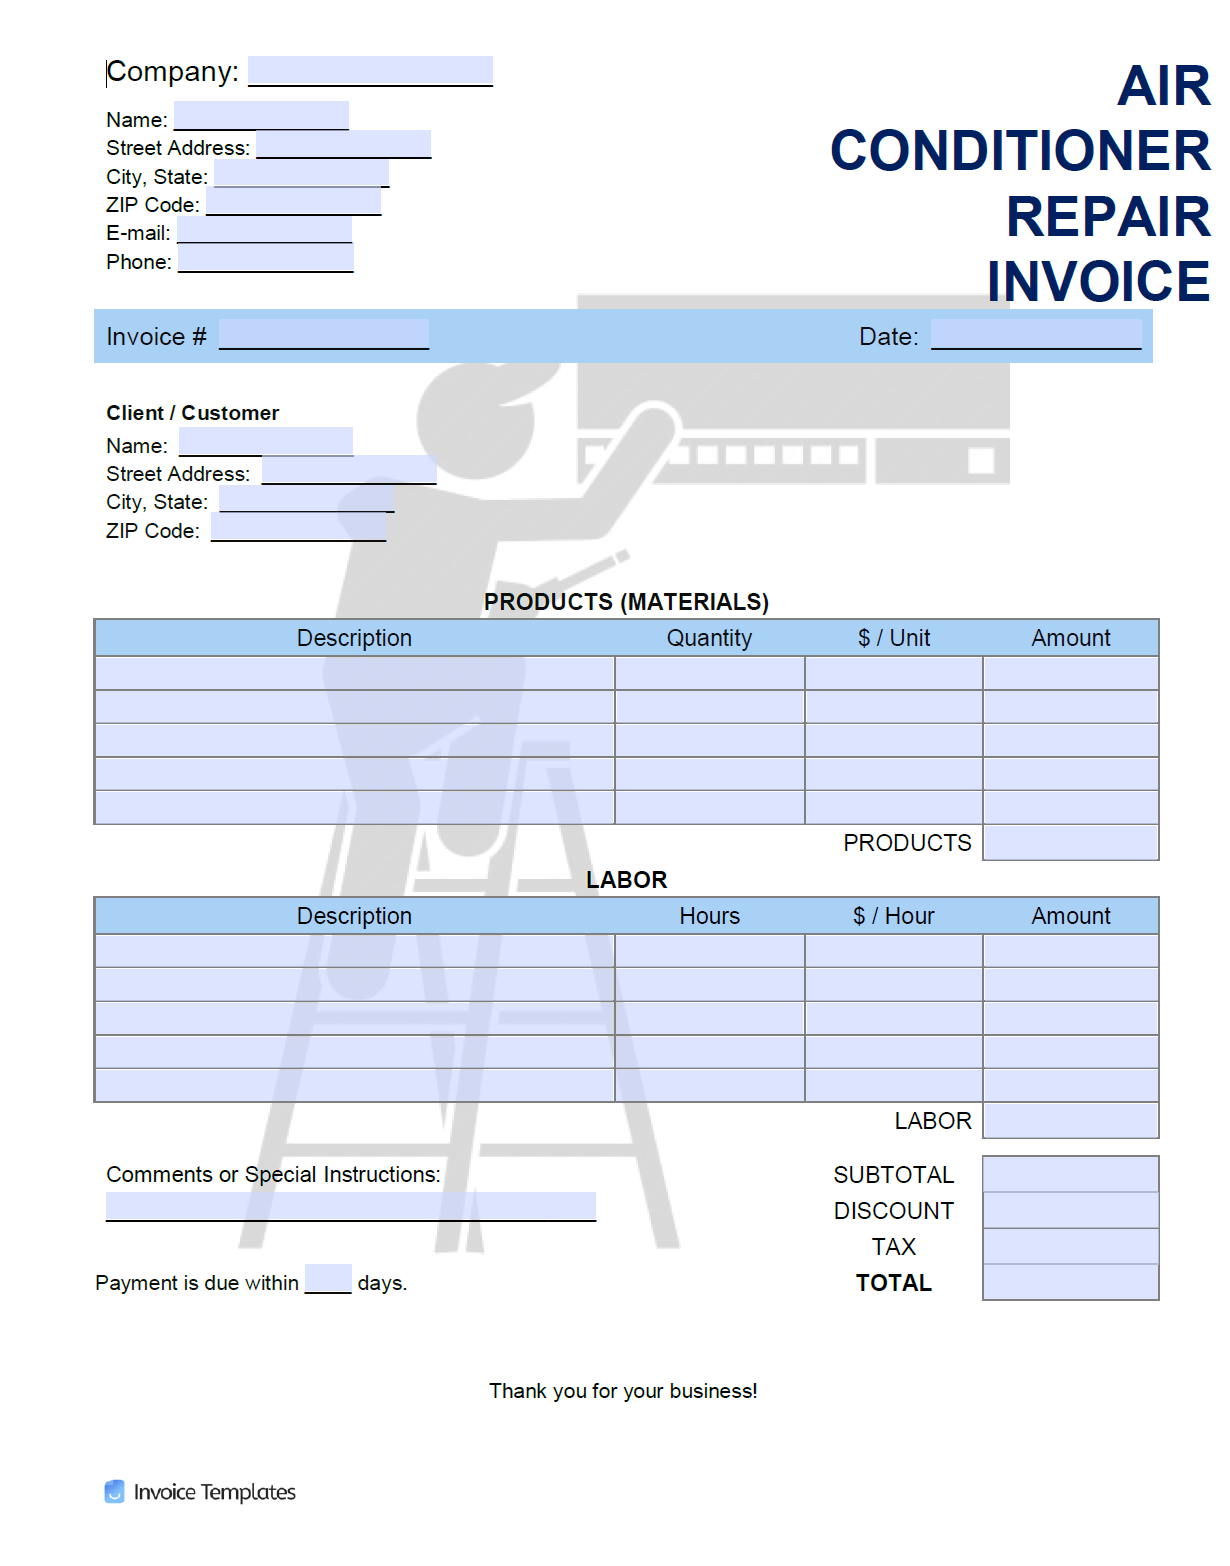 Free Air Conditioner (AC) Repair Invoice Template  PDF  WORD  EXCEL Regarding Air Conditioning Invoice Template